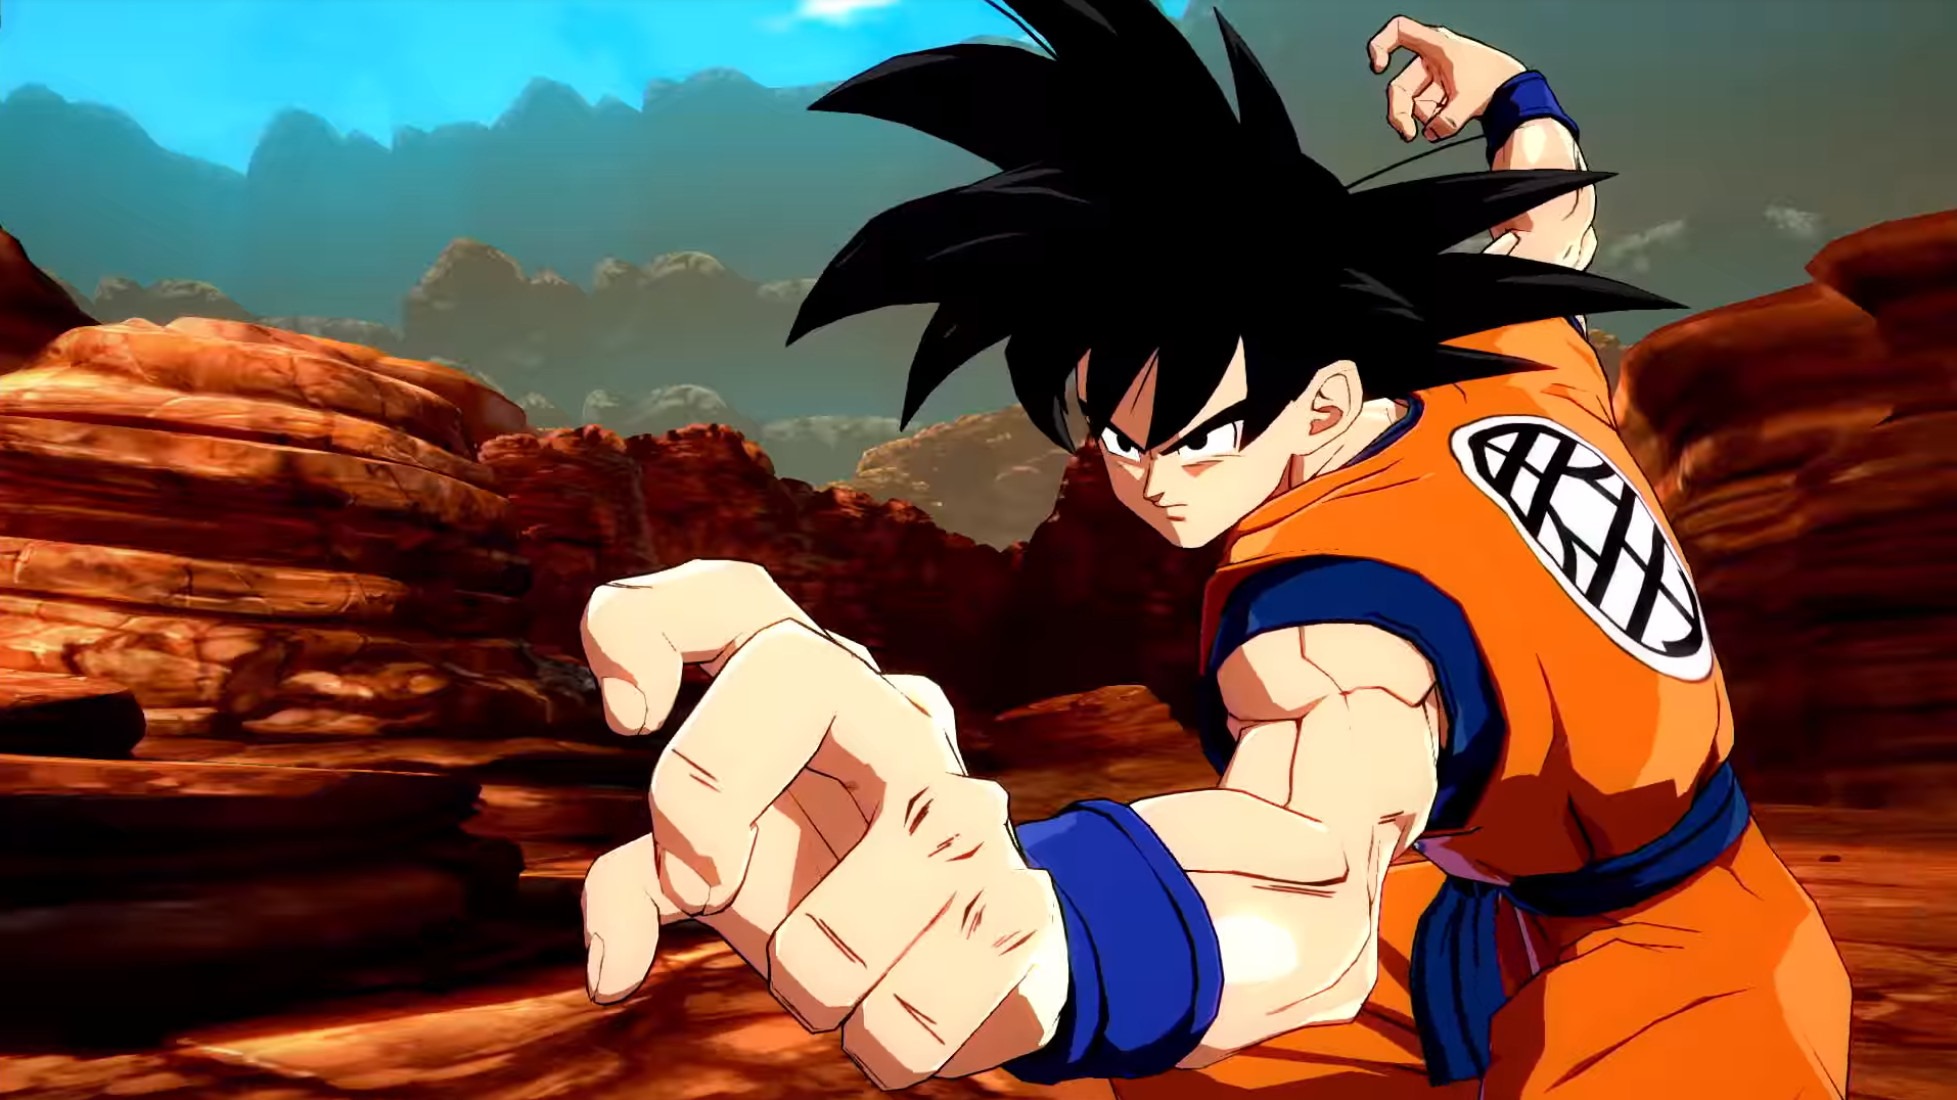 Goku Ssj2 & Majin Vegeta SSj2 vs Innocent Boo